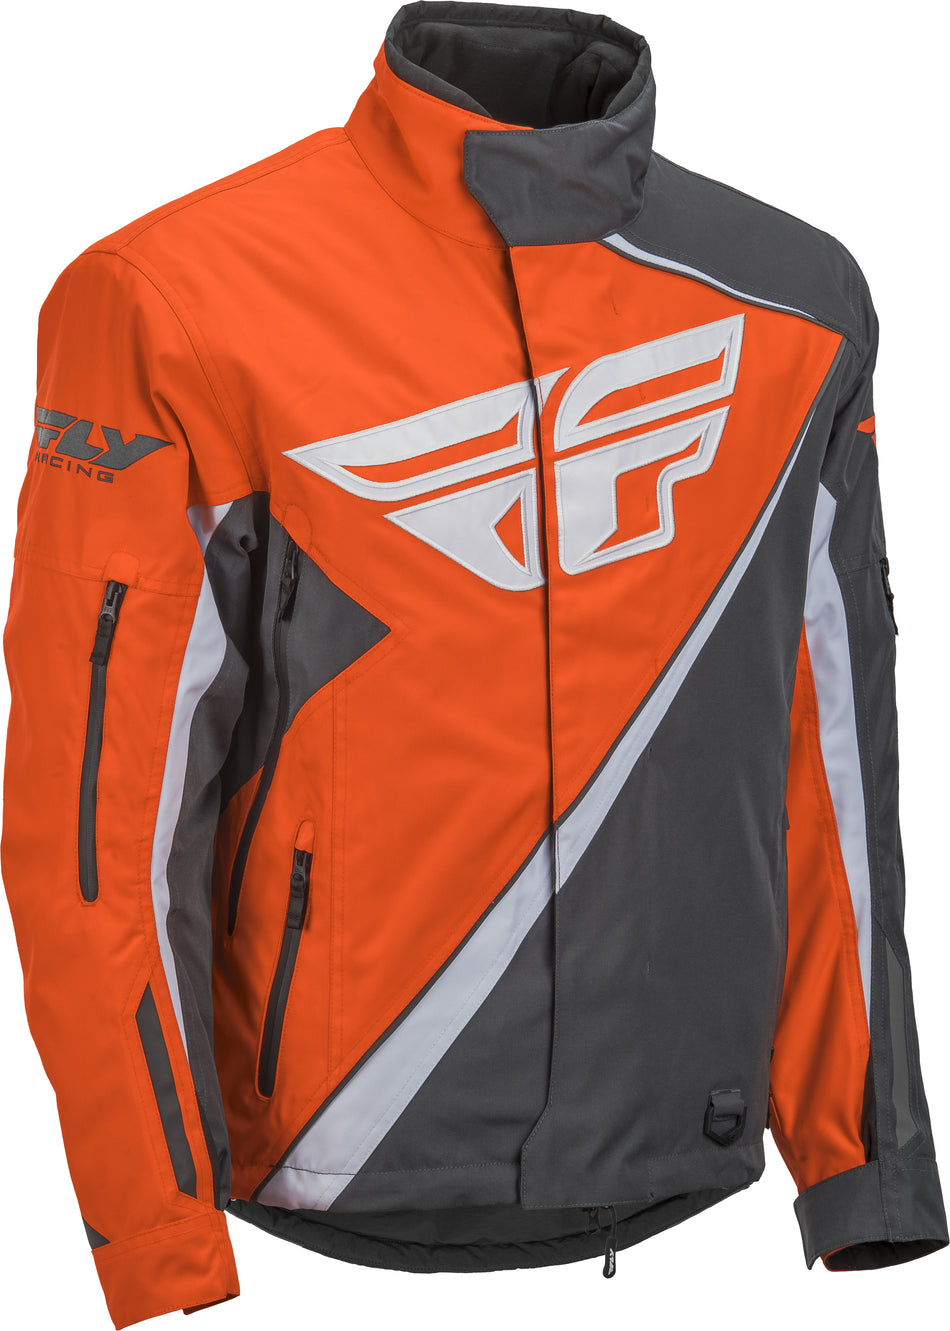 FLY RACING Fly Snx Pro Jacket Orange/Grey Yl 470-4088SYL